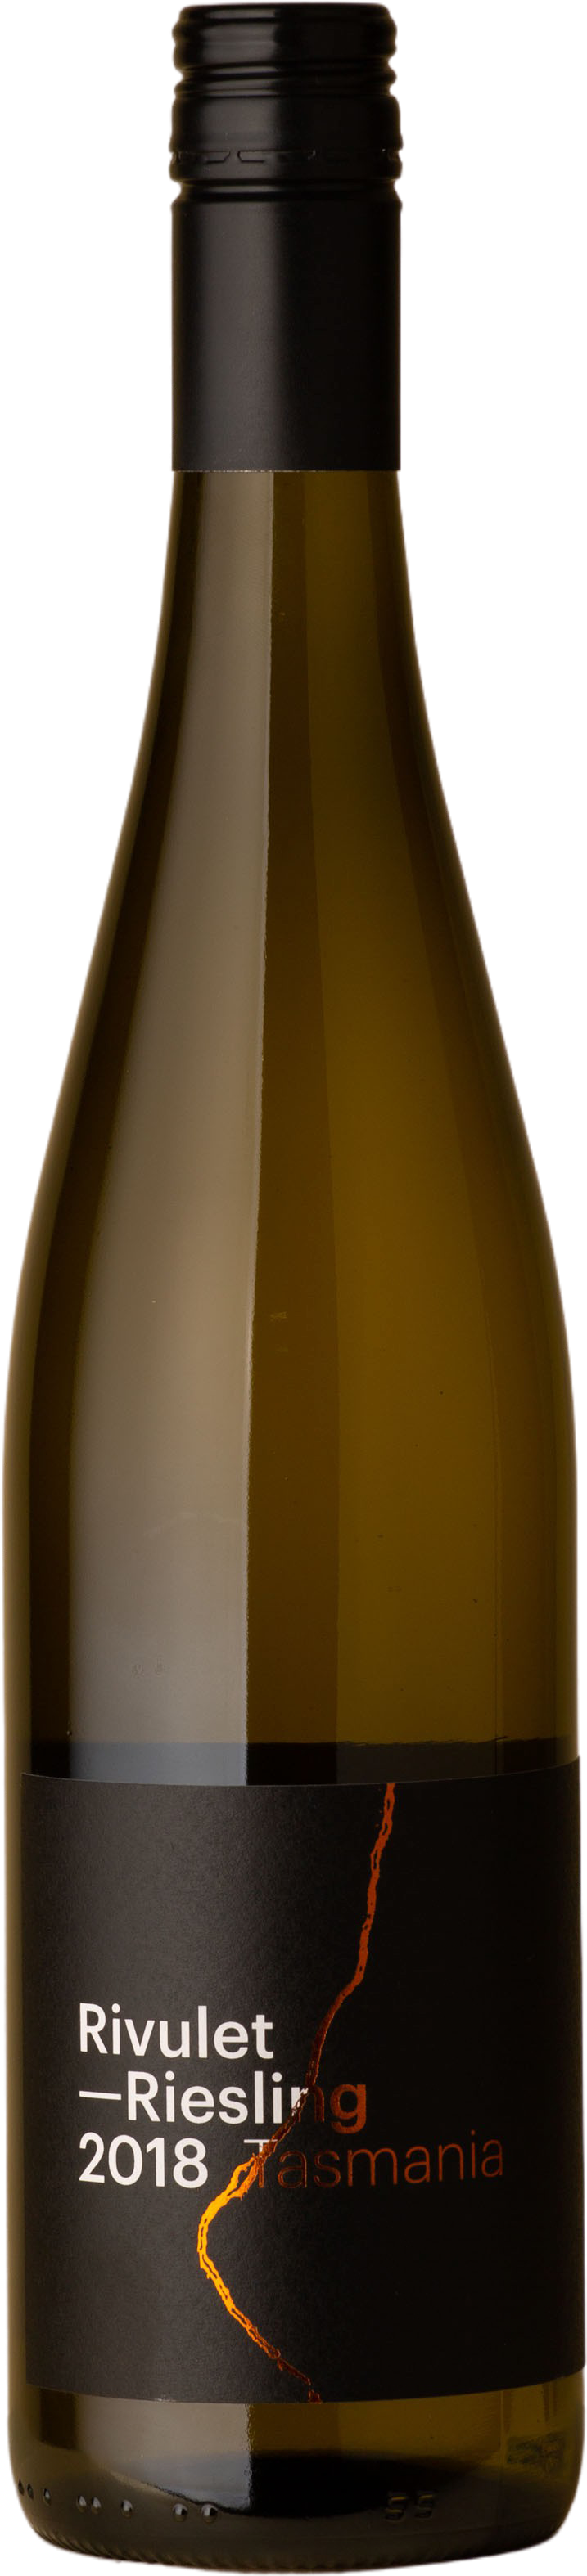 Rivulet - Riesling 2018 White Wine